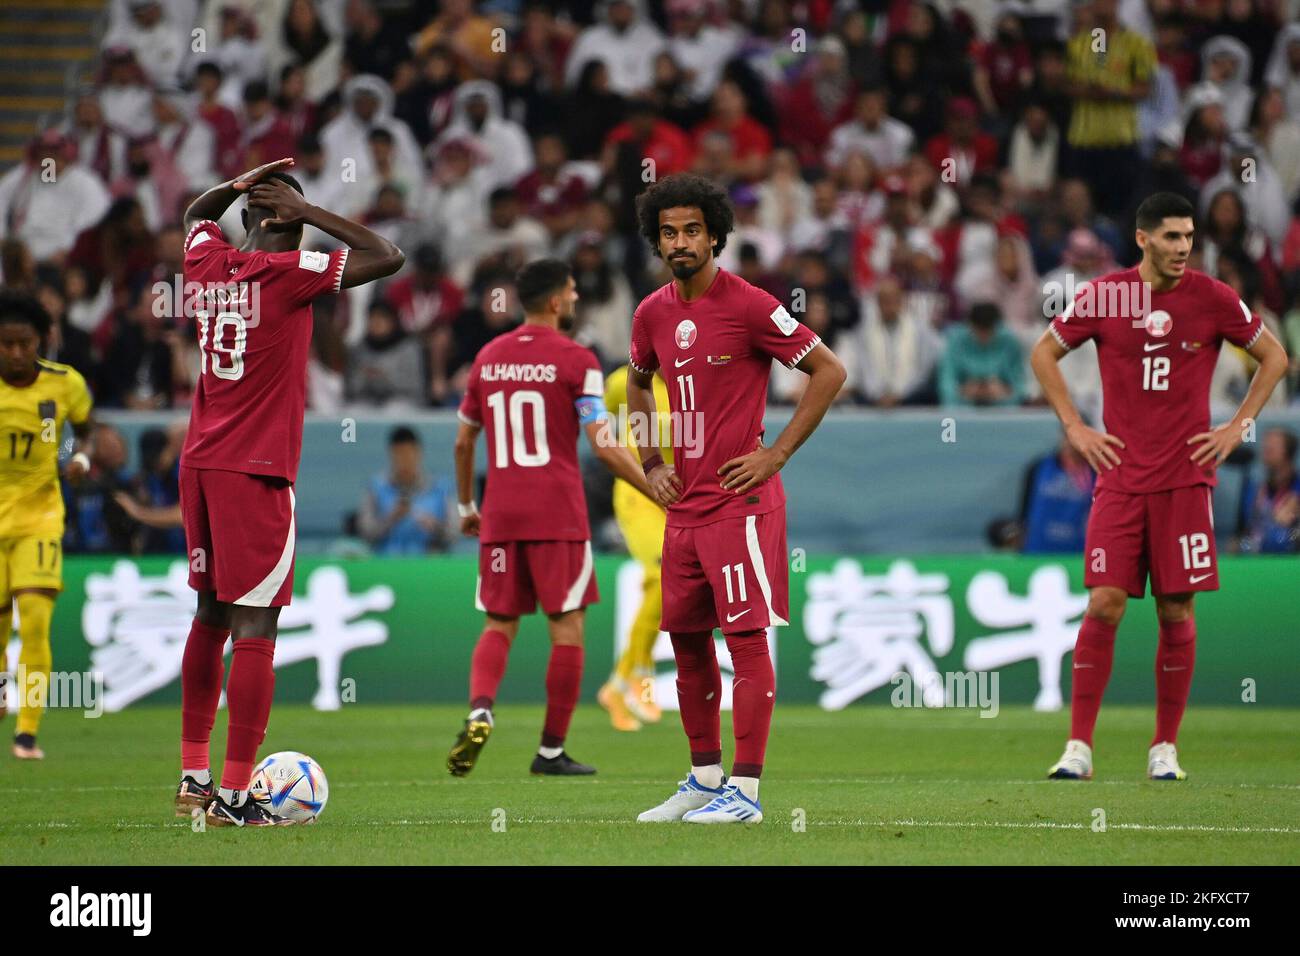 Doha, Katar. 20th Nov, 2022. Player Qataror after versustor, disappointed, frustrated, dejected, action. From left: ALMOEZ ALI (Qatar), HASSAN ALHAYDOS (Qatar), AKRAM AFIF (Qatar), KARIM BOUDIAF (Qatar). Game 1, Group A Qatar - Ecuador, on 20/11/2022, Al Bayt Stadium. Soccer World Cup 20122 in Qatar from 20.11. - 18.12.2022 ? Credit: dpa/Alamy Live News Stock Photo